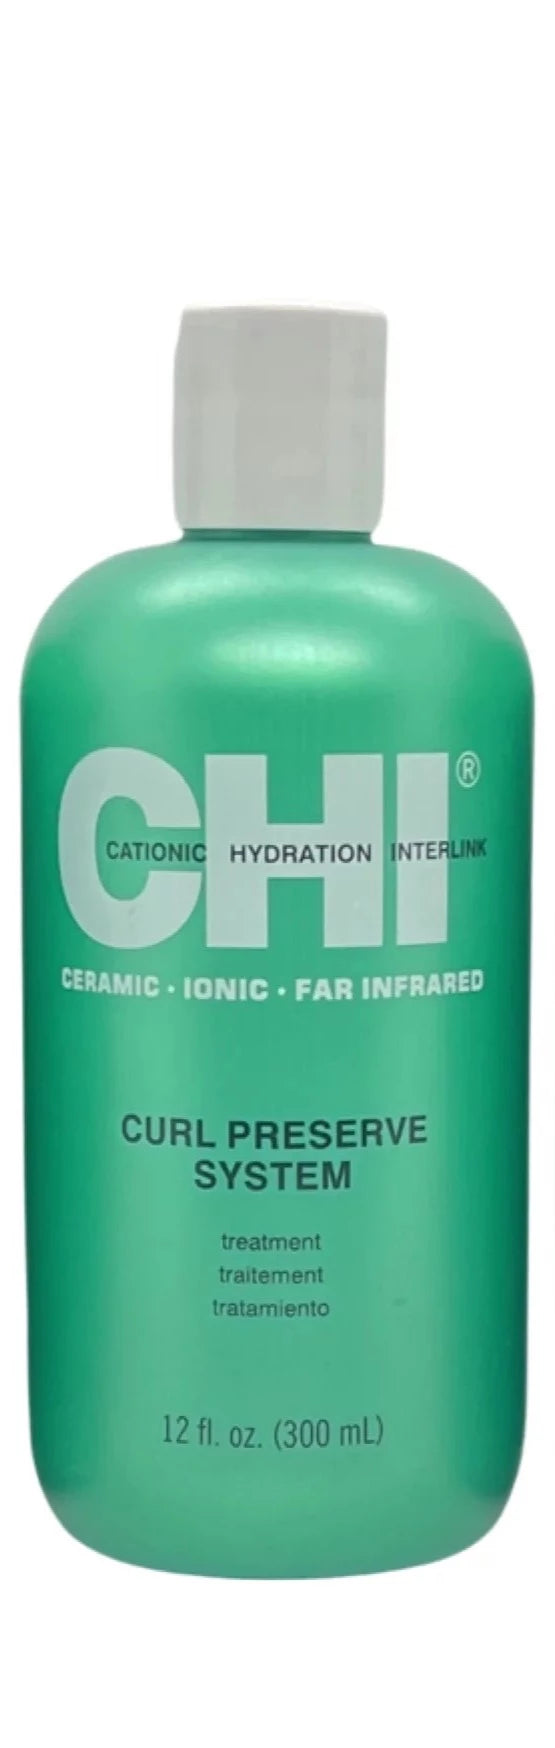 CHI Curl Preserve System Treatment image of 12 oz bottle